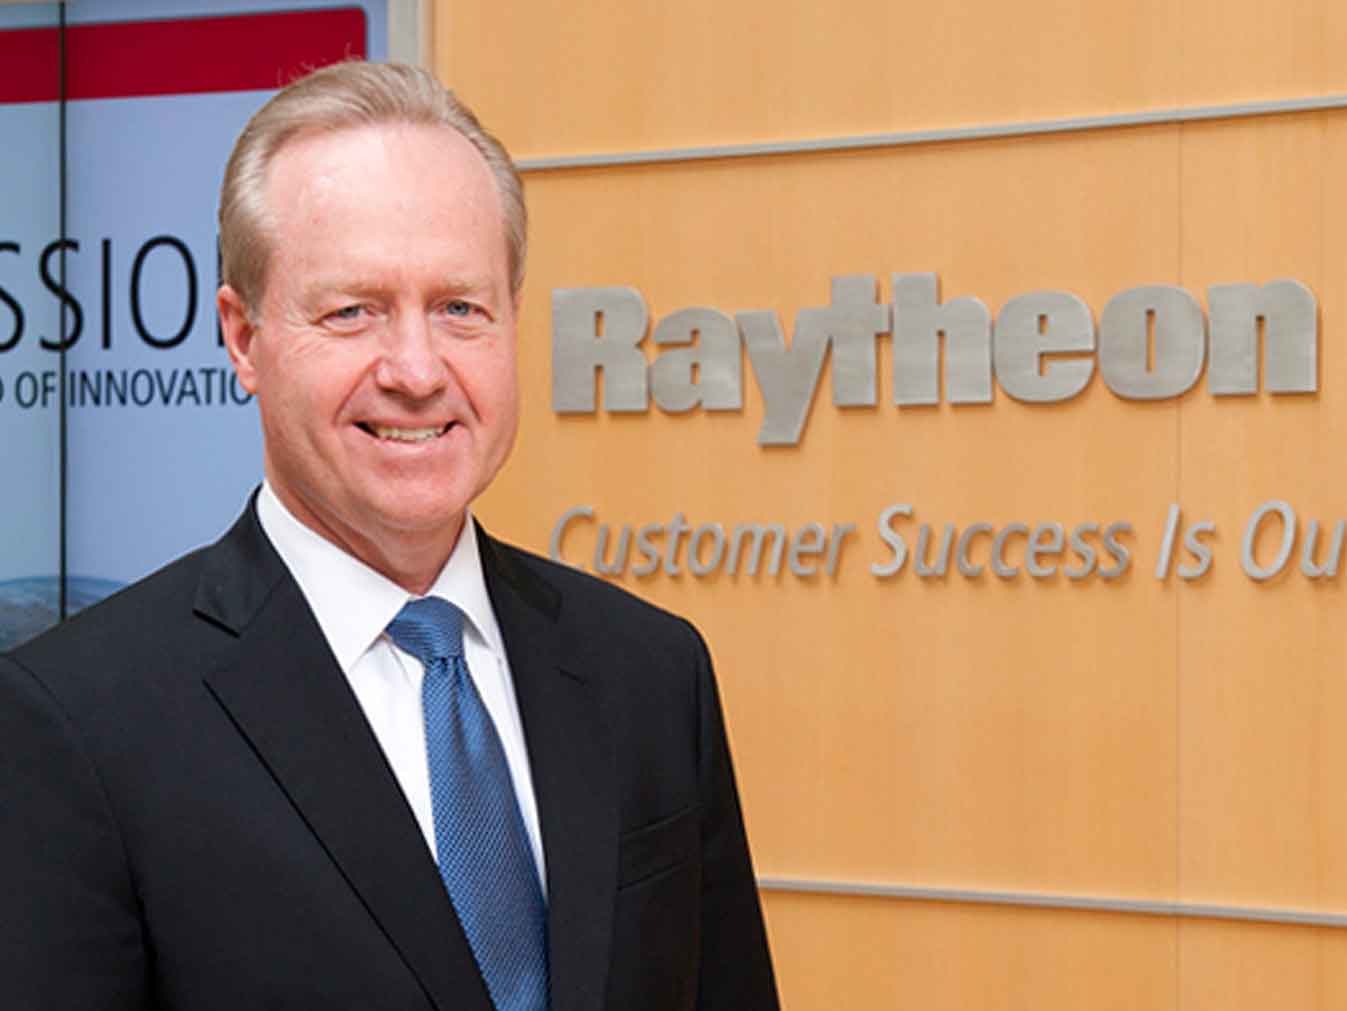 Raytheon Chairman and CEO Thomas A. Kennedy